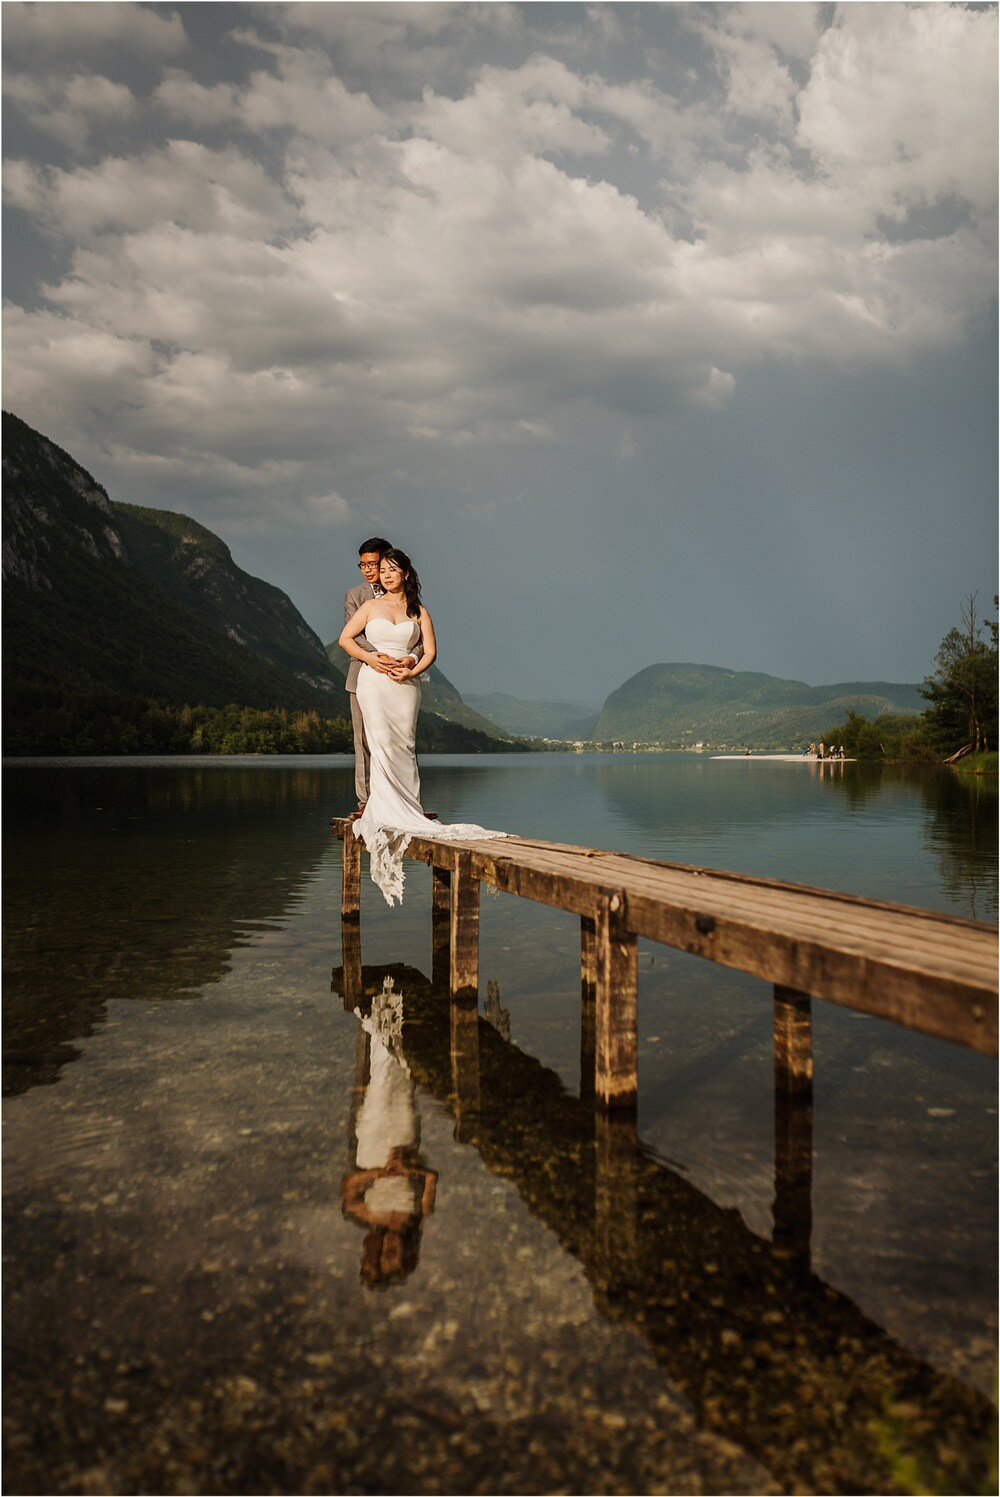 best of wedding photography 2019 photographer italy ireland tuscany santorini greece spain barcelona lake como chateux scotland destination wedding 0025.jpg